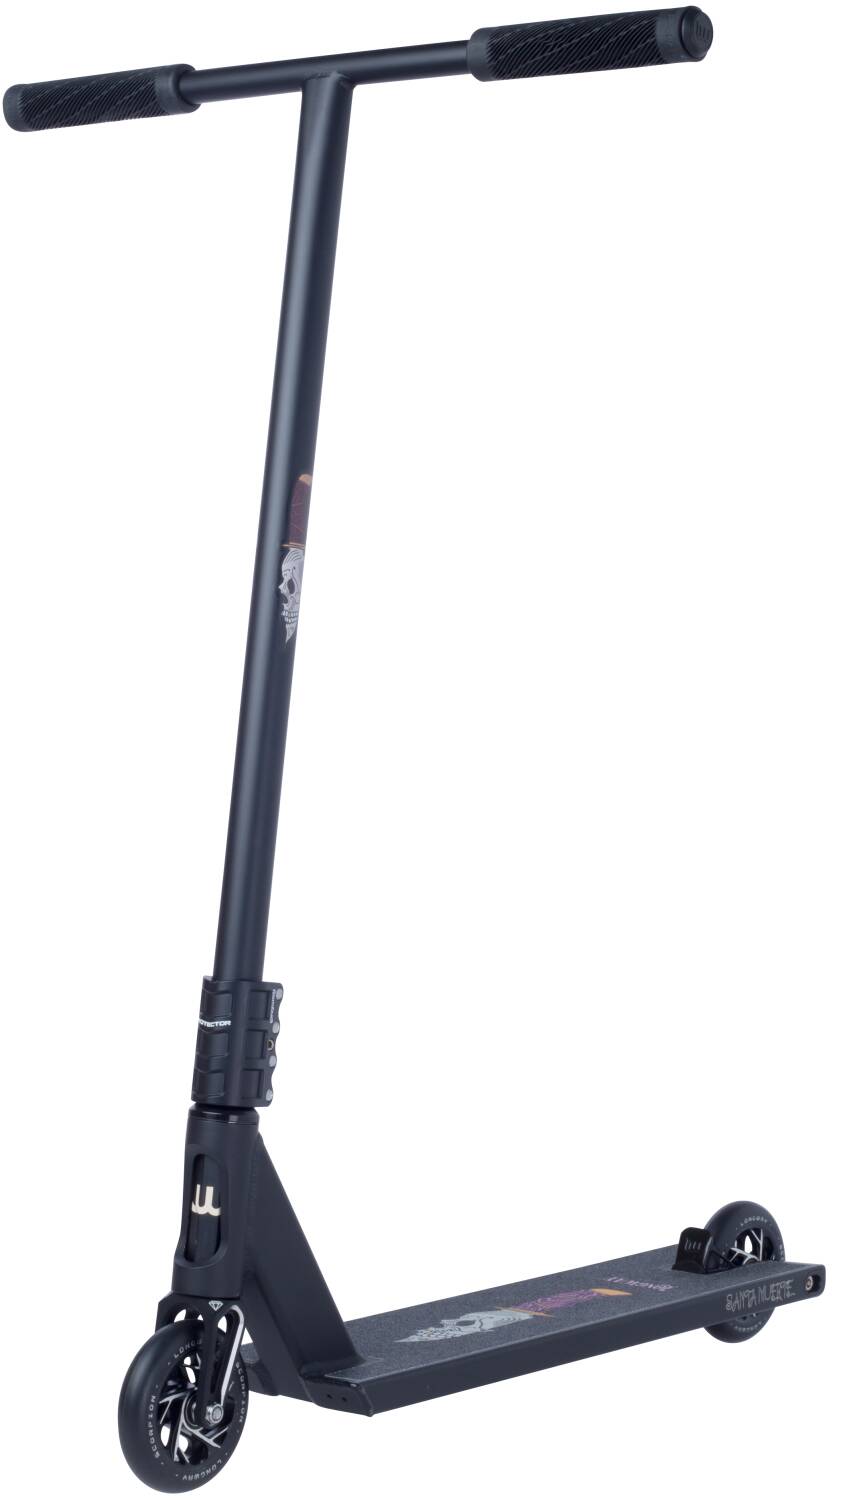 Longway Santa Muerte Pro Scooter 5.5" - Black